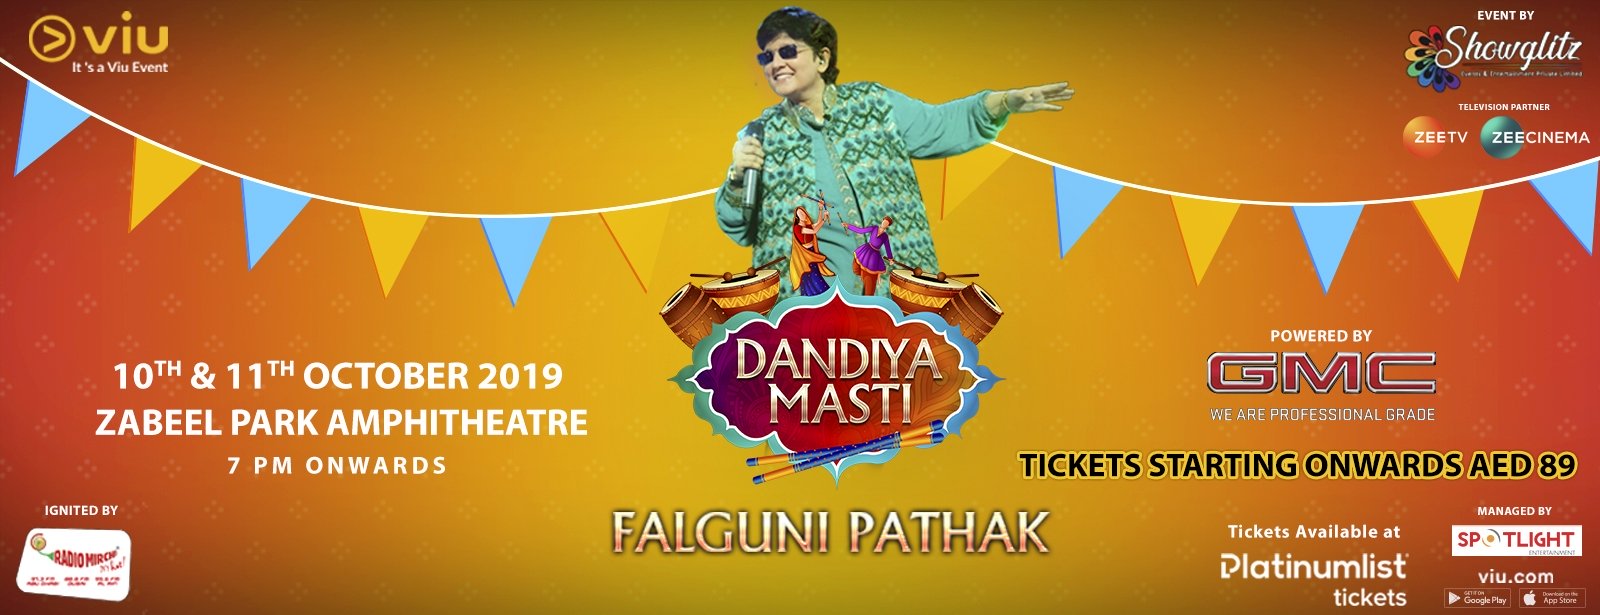 Dandiya Masti With Falguni Pathak In Dubai Coming Soon In Uae • falguni pathak was born in vadodara, india. dandiya masti with falguni pathak in